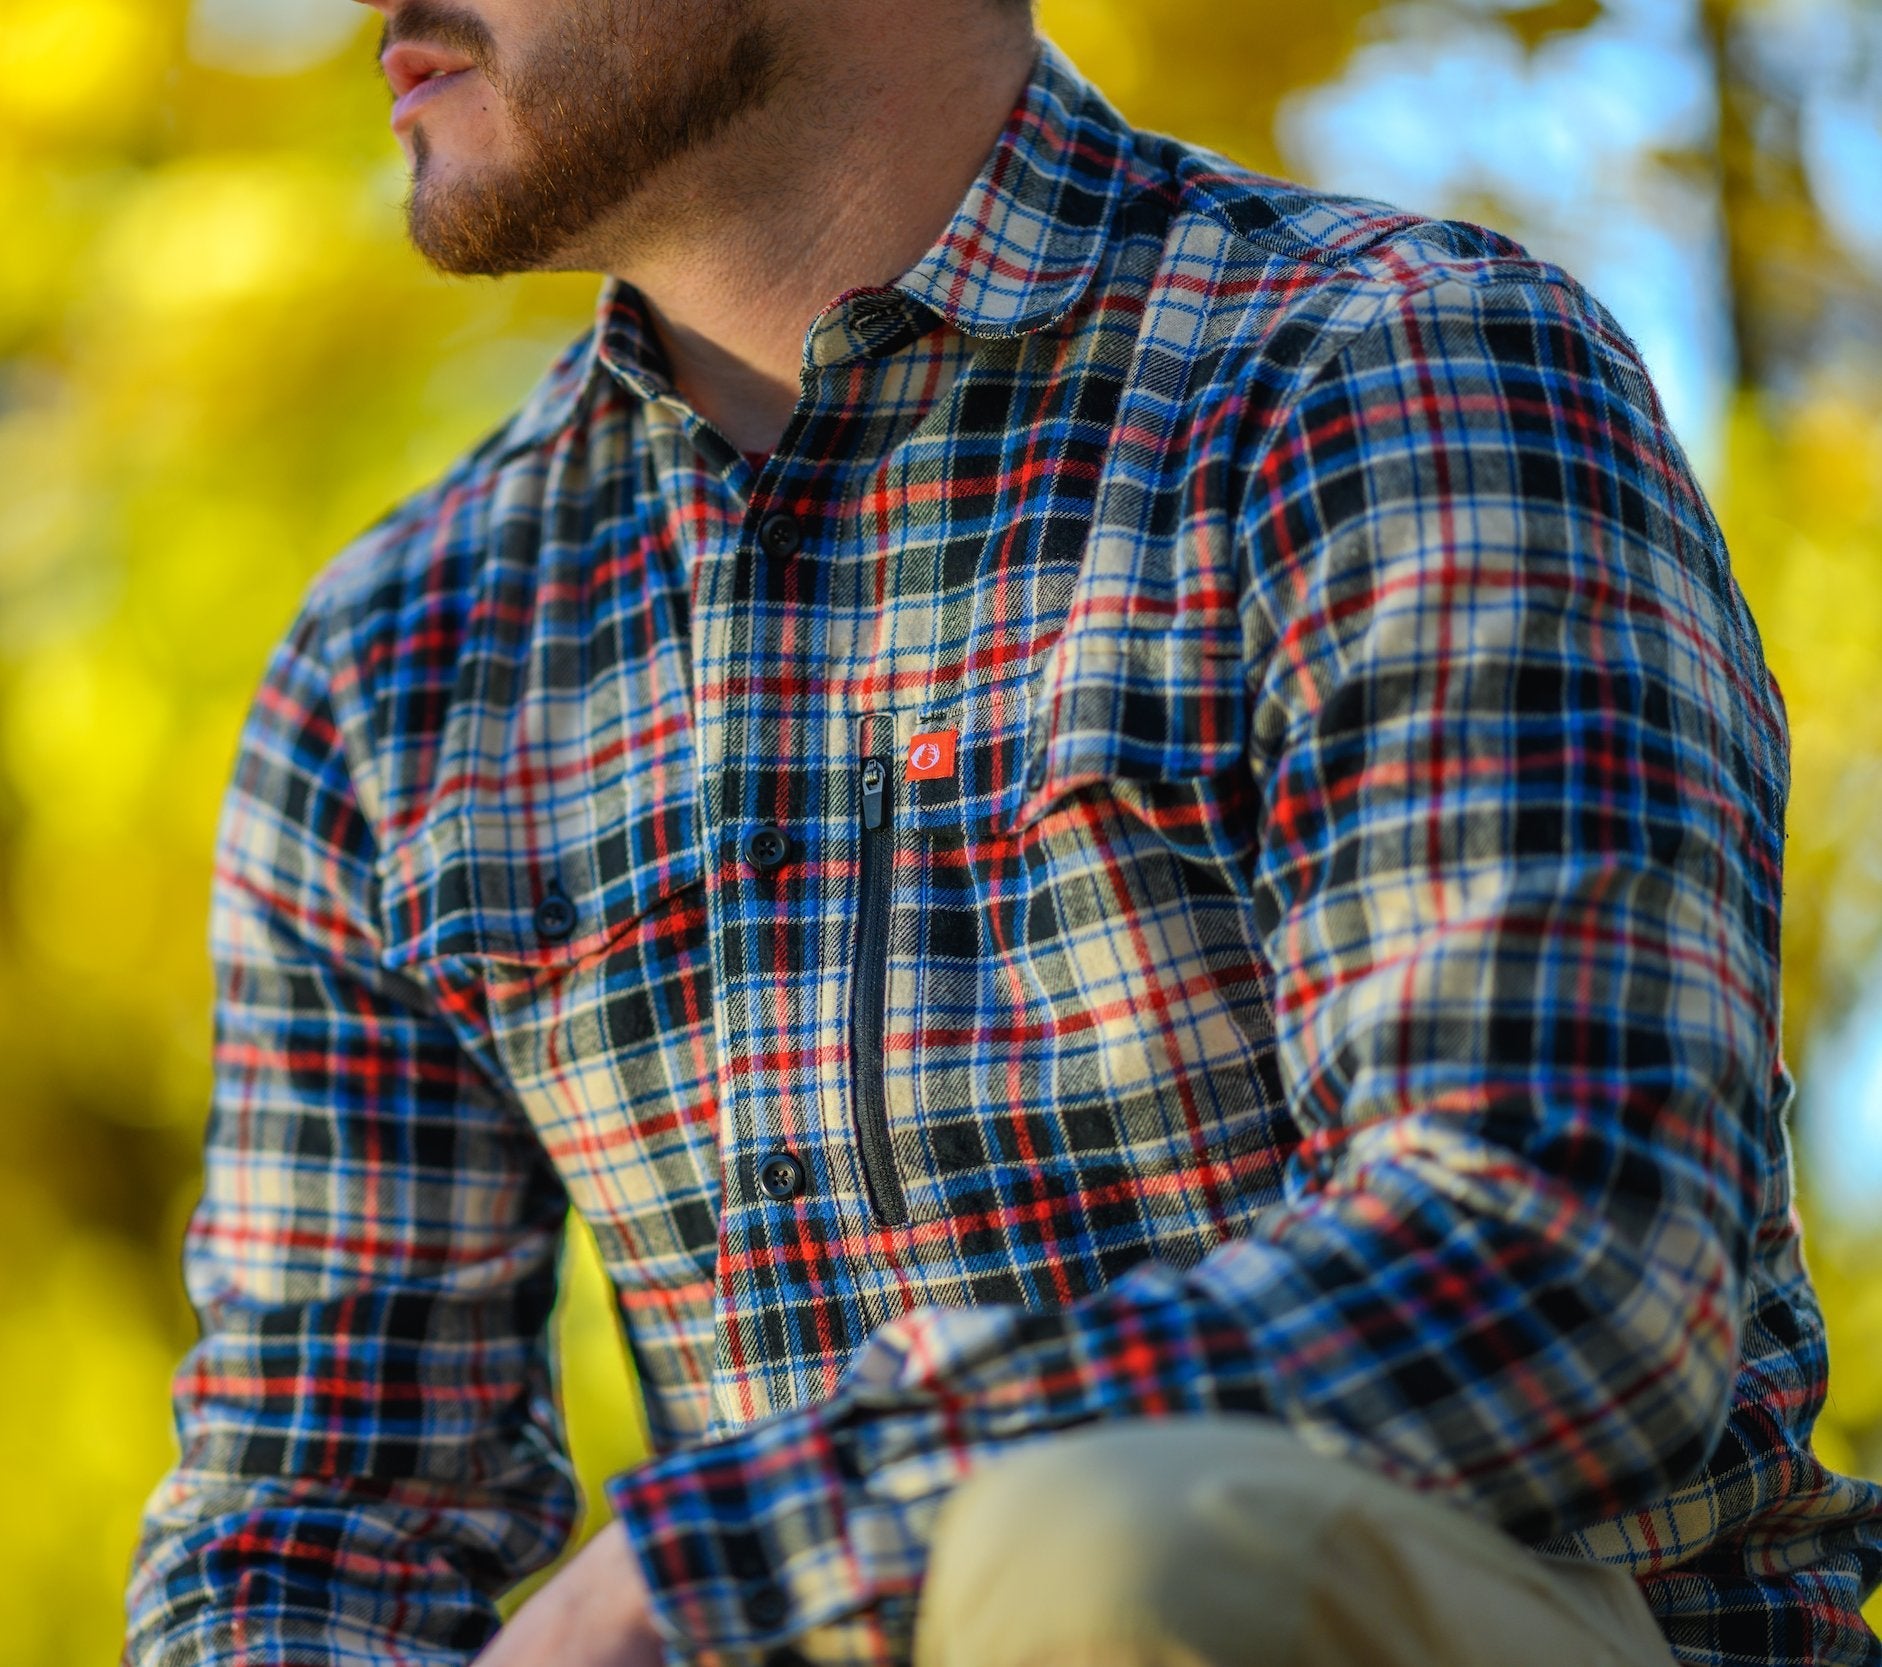 The American Outdoorsman Size XXL Navy Blue Long sleeve Buttondown Fishing  Shirt